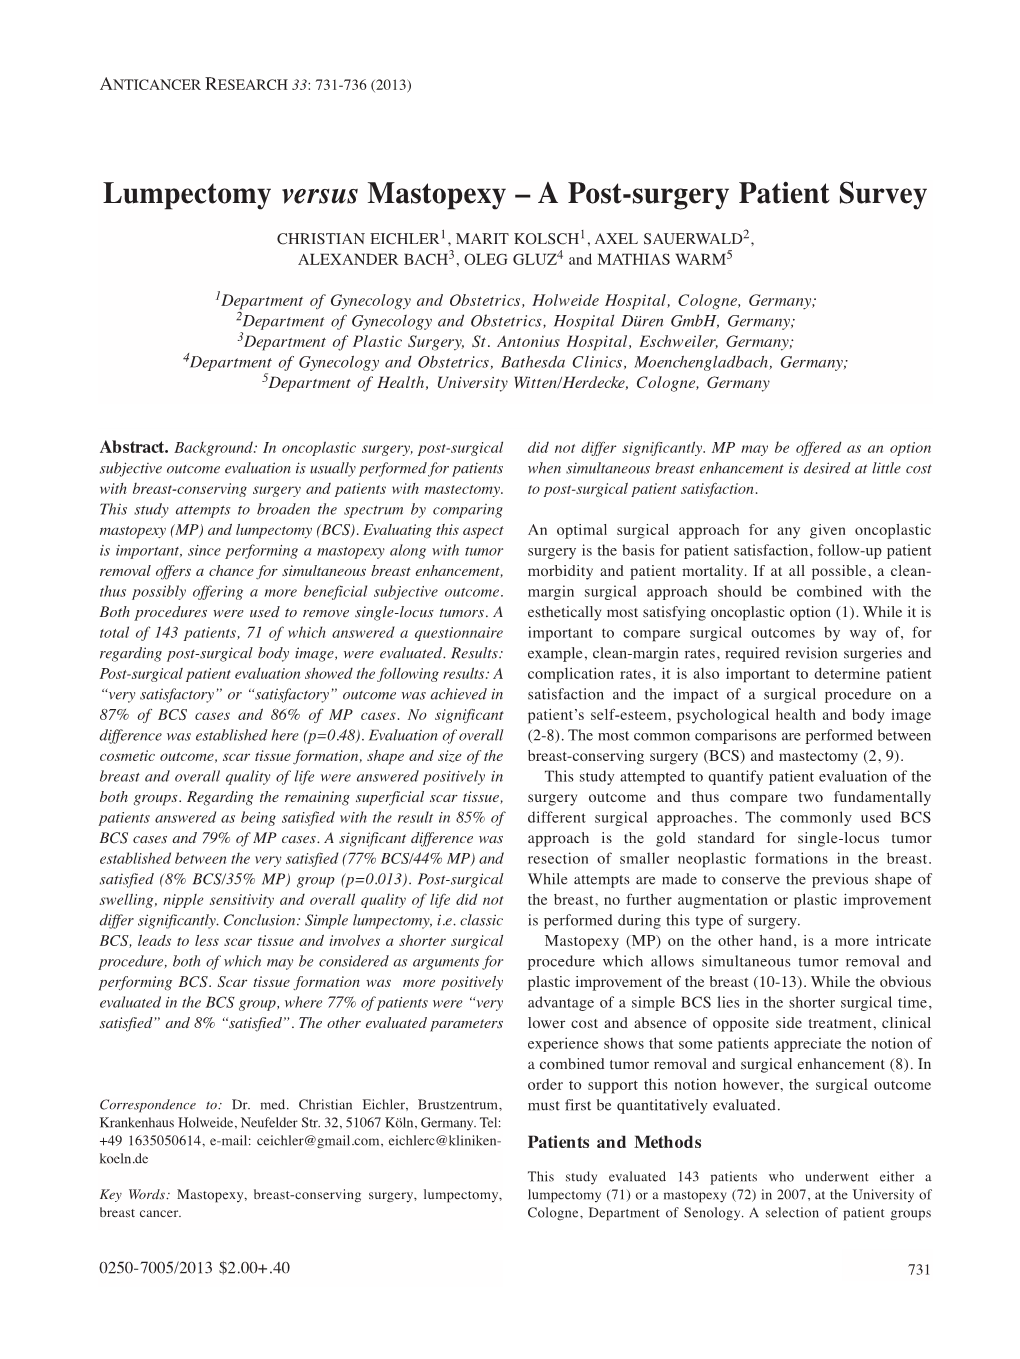 Lumpectomy Versus Mastopexy – a Post-Surgery Patient Survey